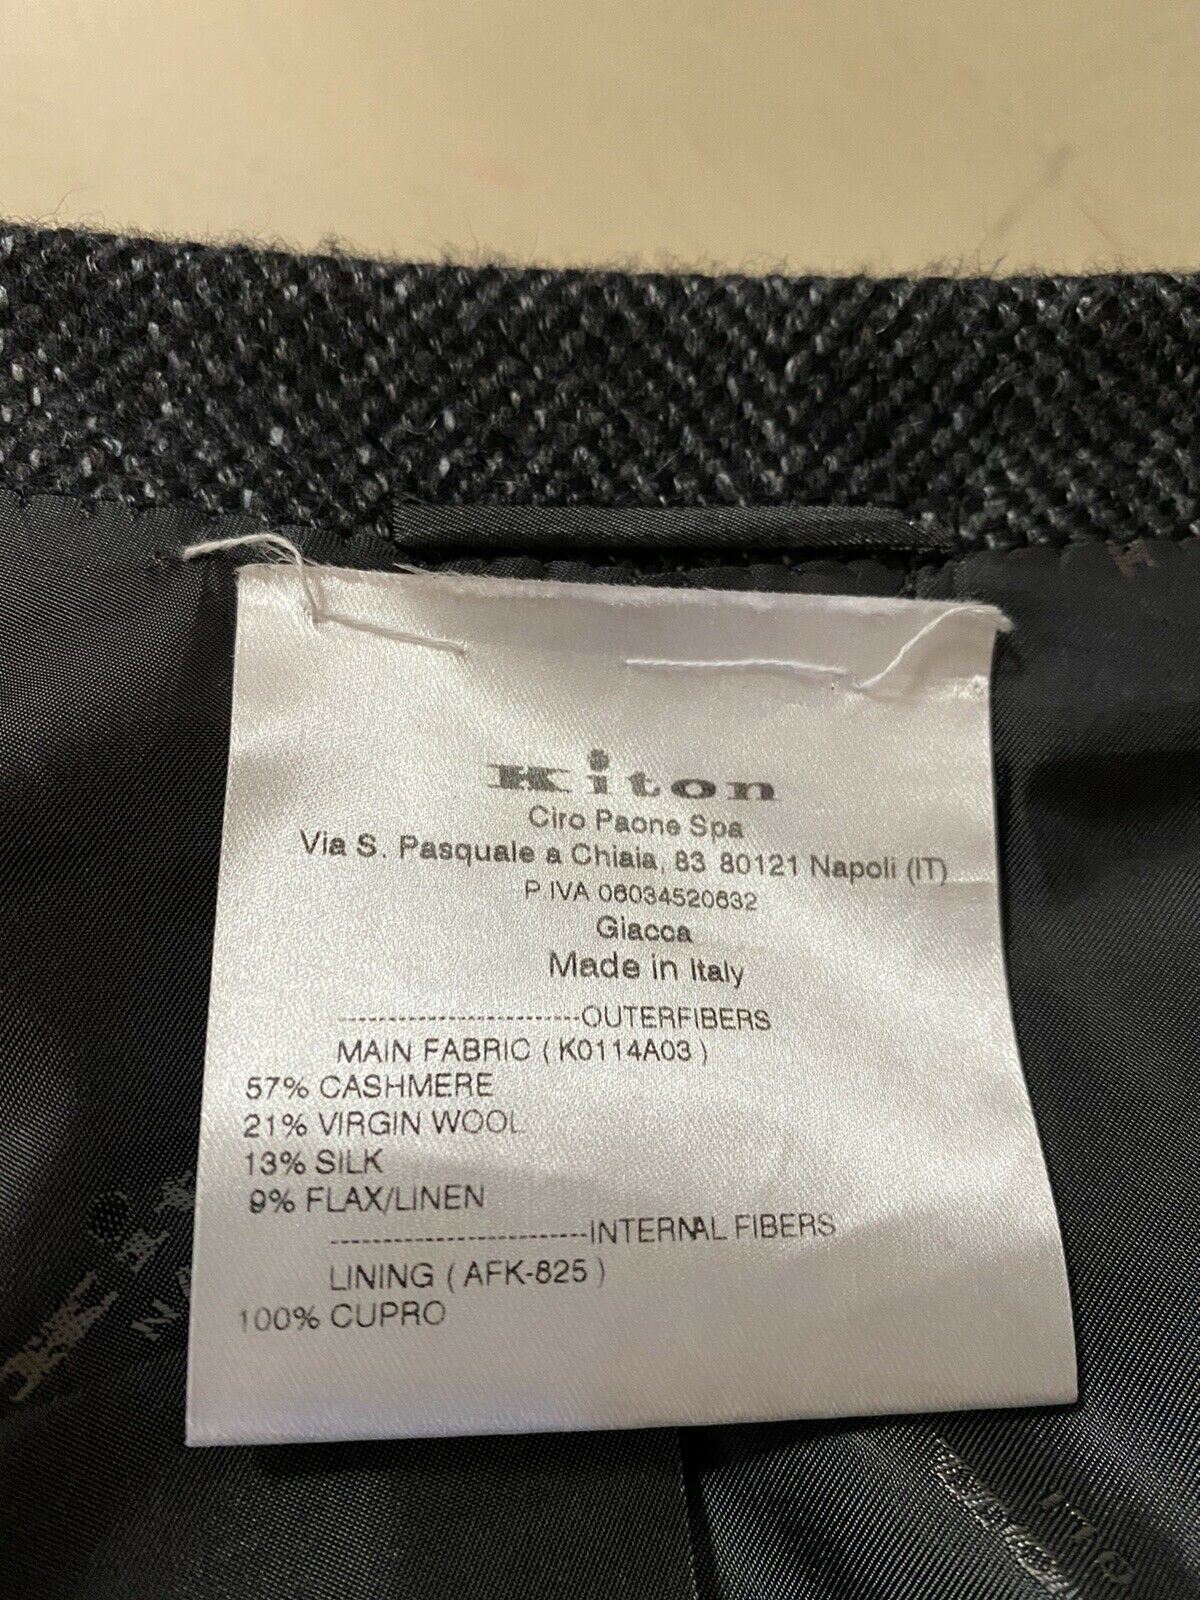 NWT $9895 Kiton Men Sport Coat Blazer Jacket Color DK Gray 42R US/52R Eu